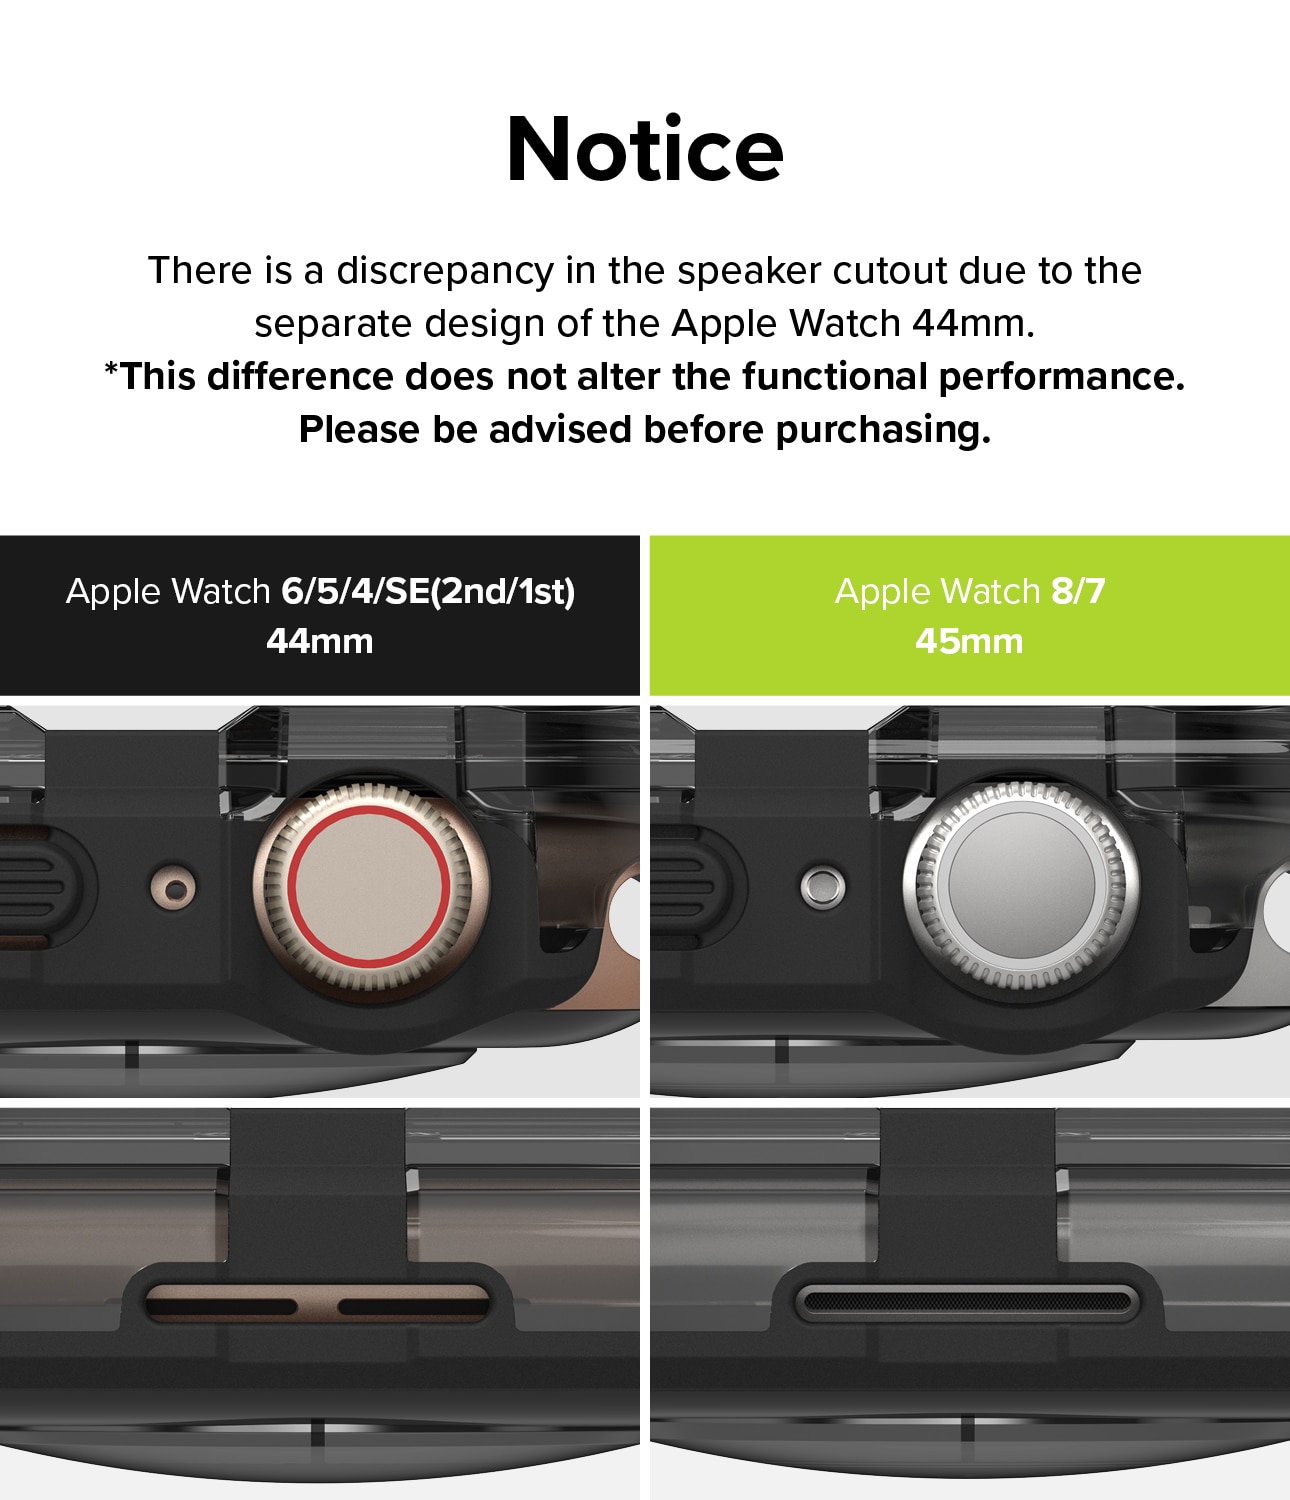 Apple Watch SE 44mm Fusion Bumper Neon Orange